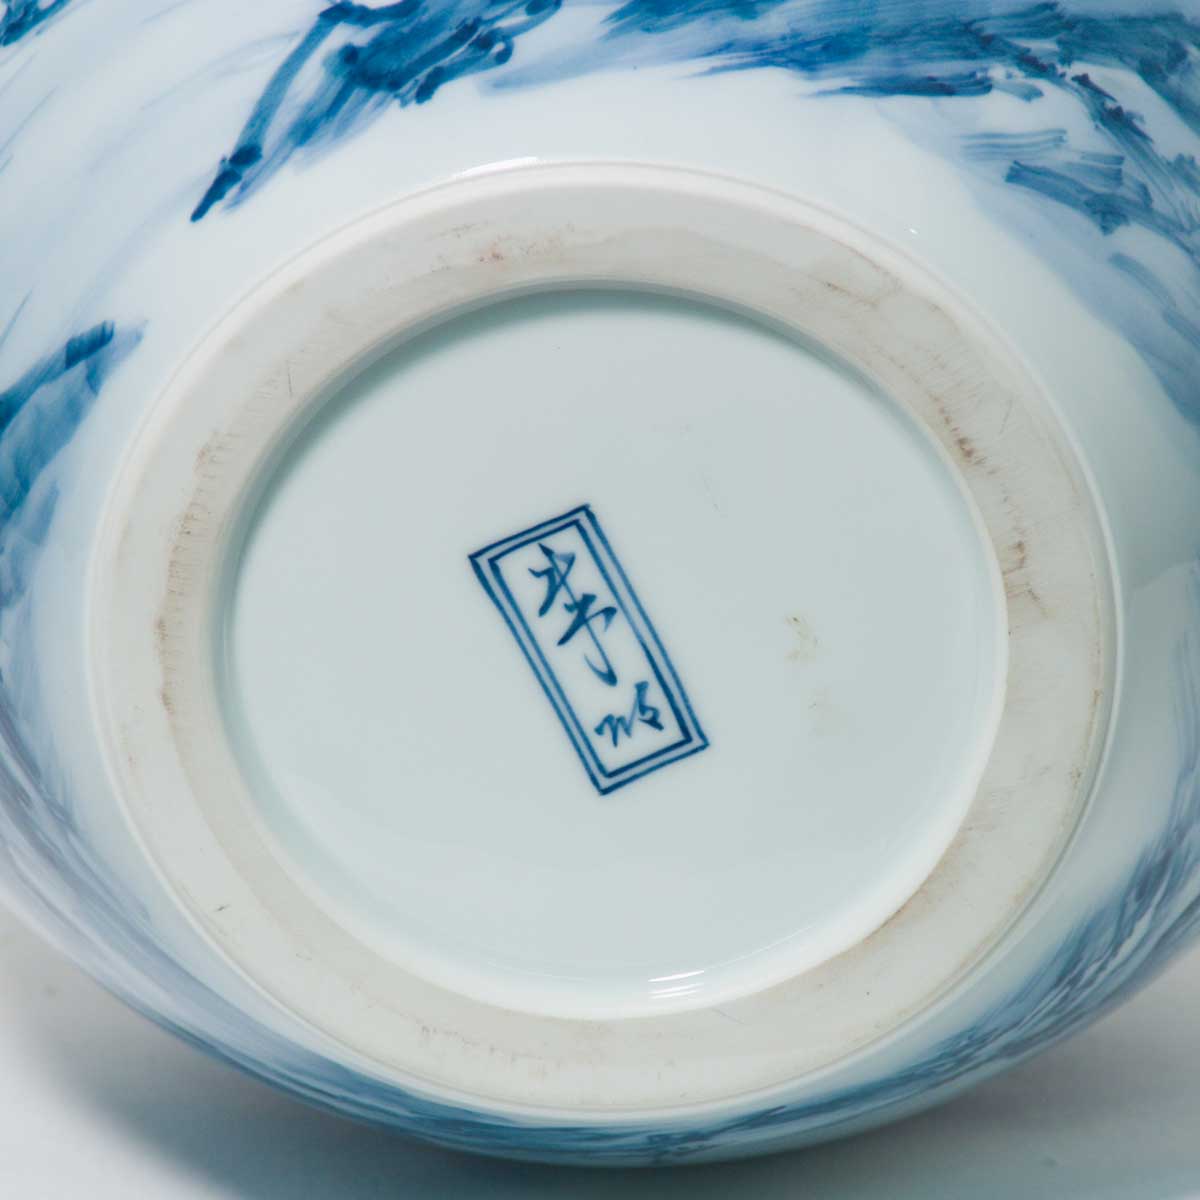 Large Hand-painted Porcelain Landscape Vase by Shumei Fujii